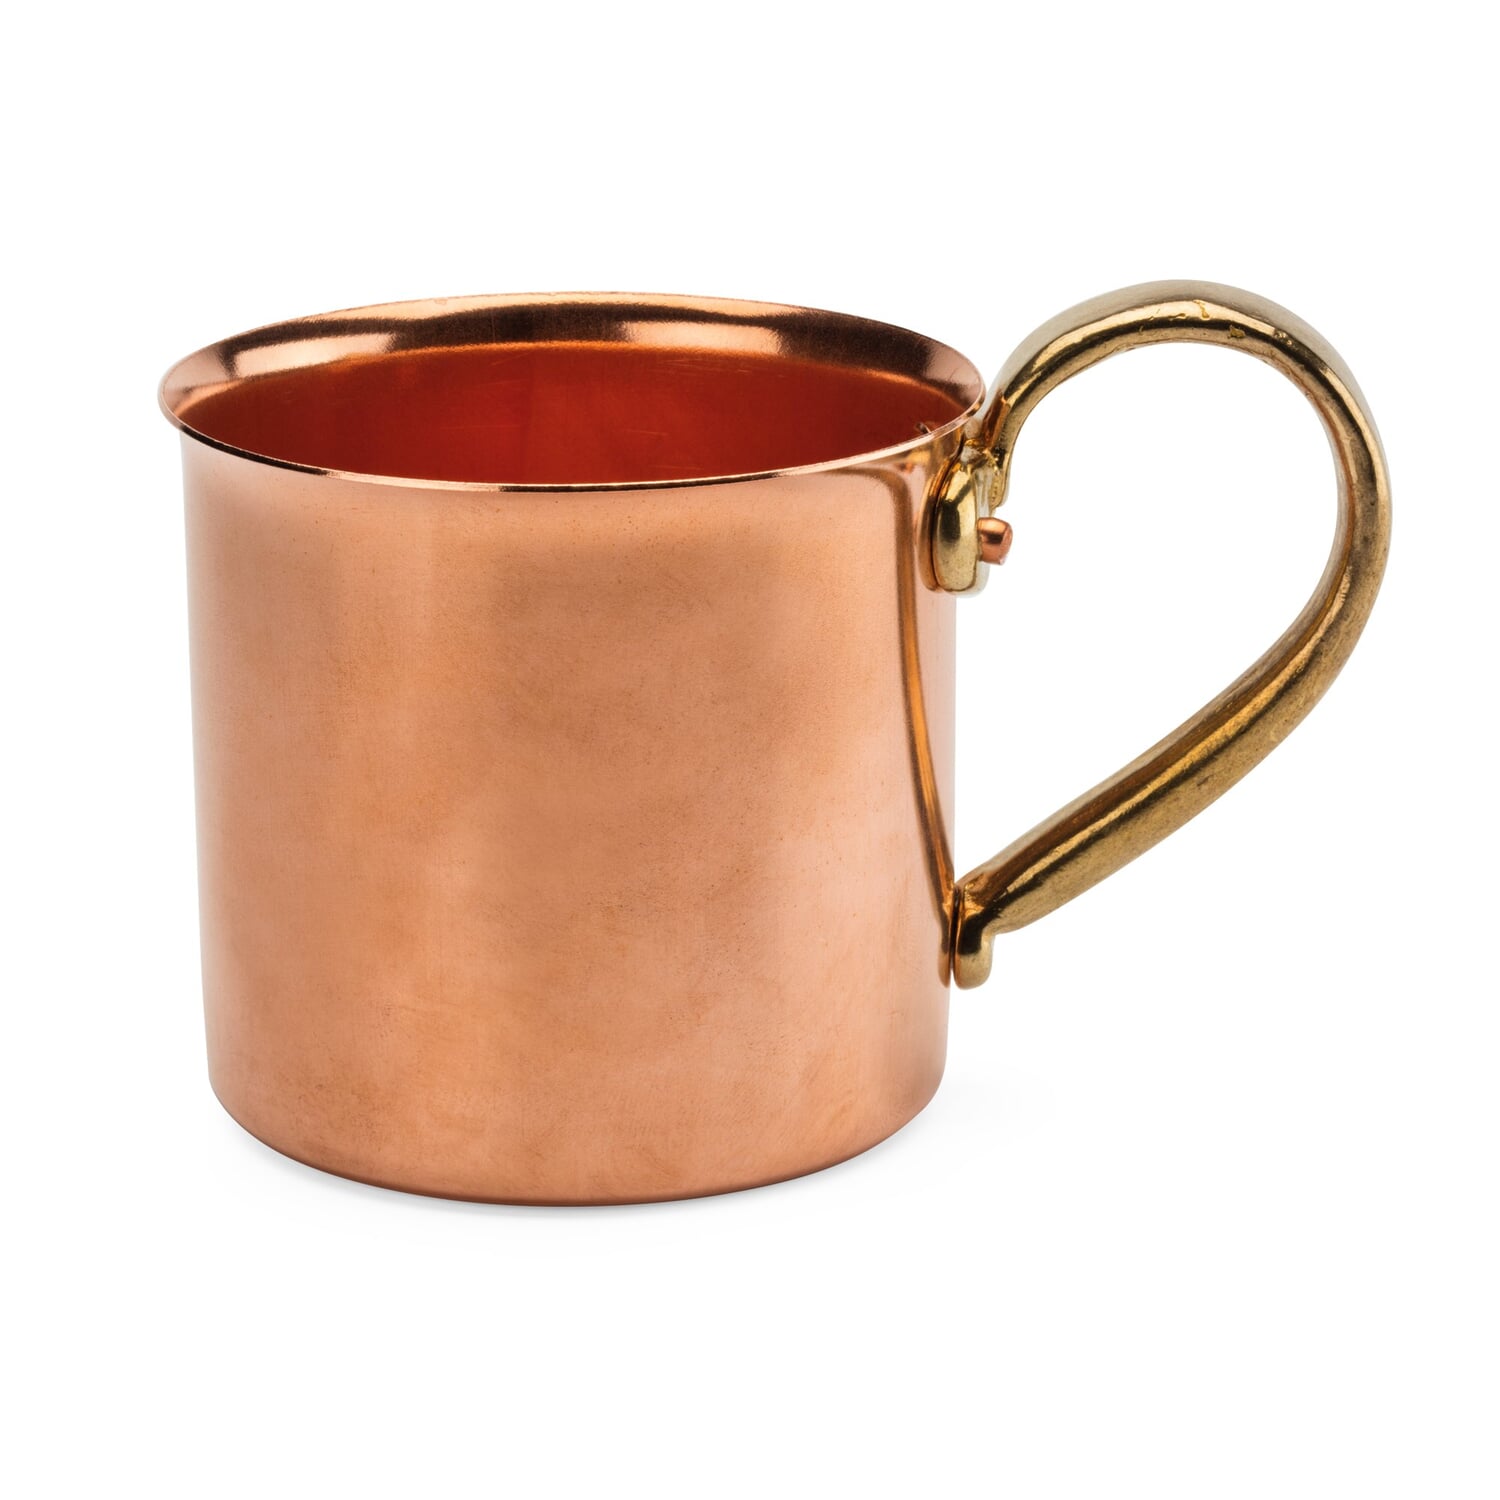 https://assets.manufactum.de/p/010/010071/10071_01.jpg/copper-mug-brass-handle.jpg?profile=pdsmain_1500